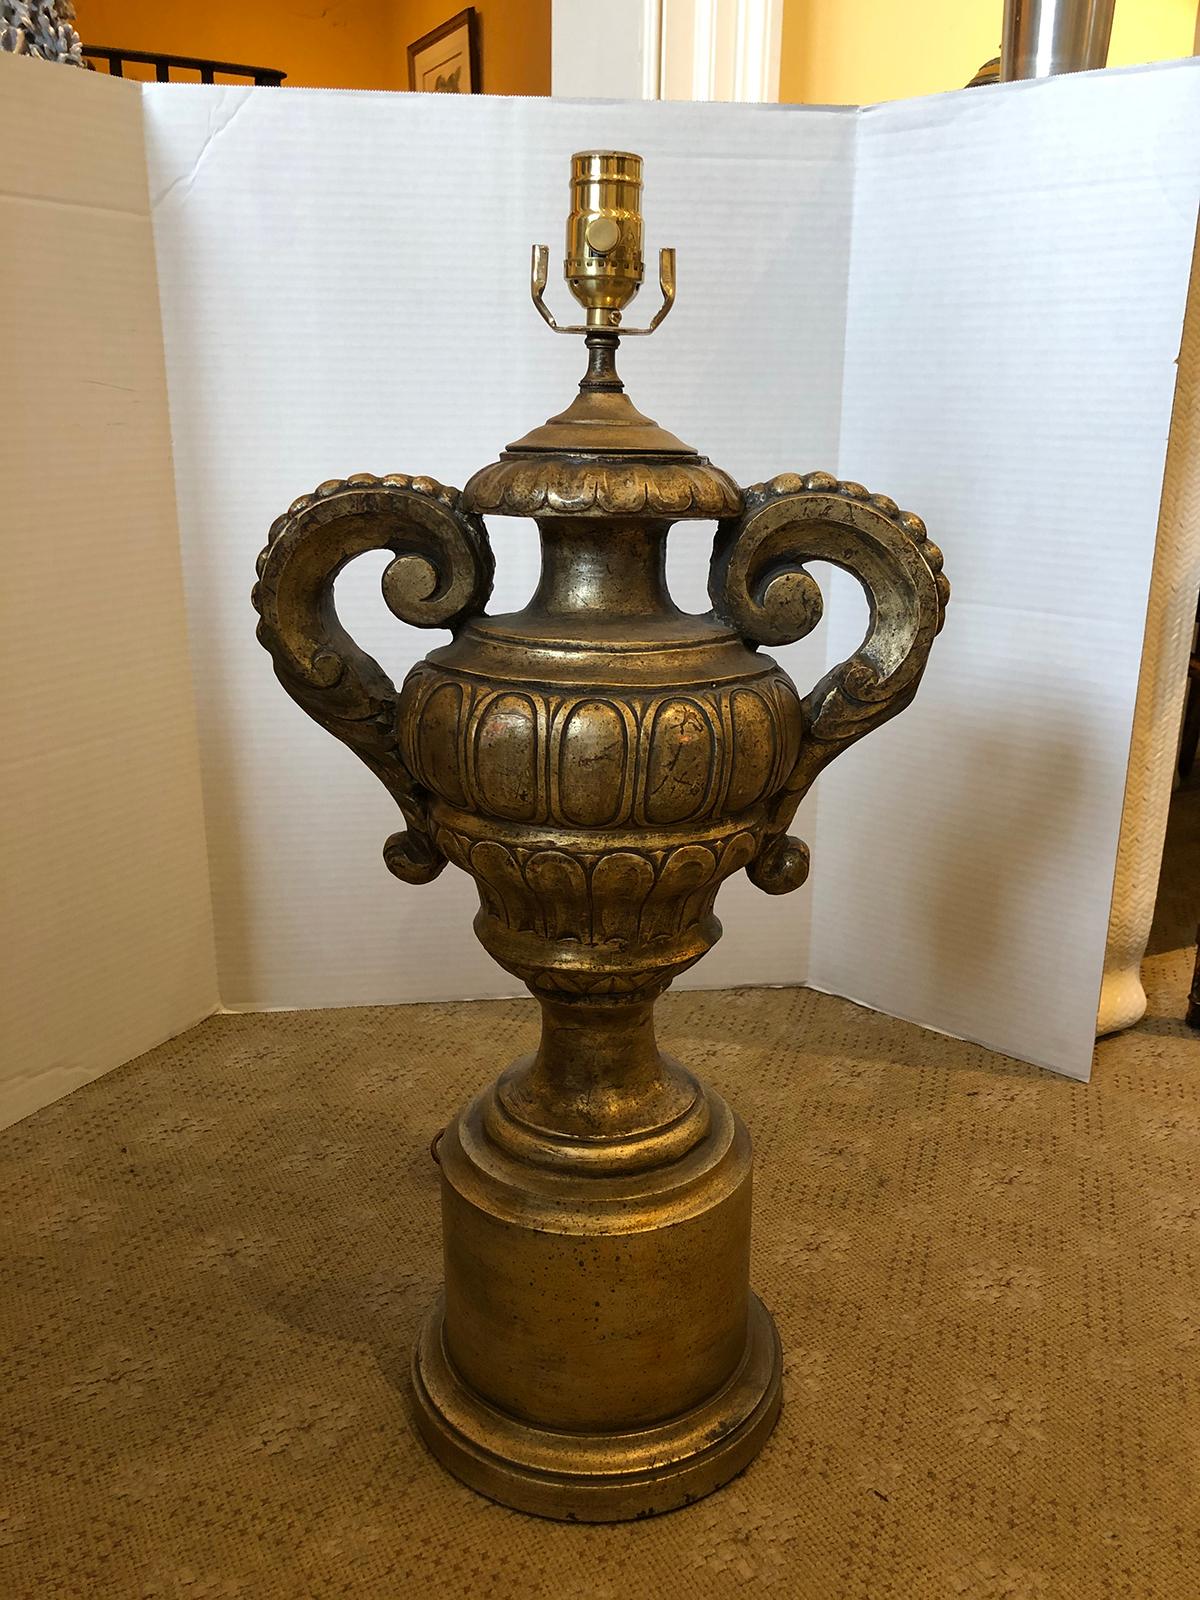 20th century Italian silver gilt urn lamp
New wiring.